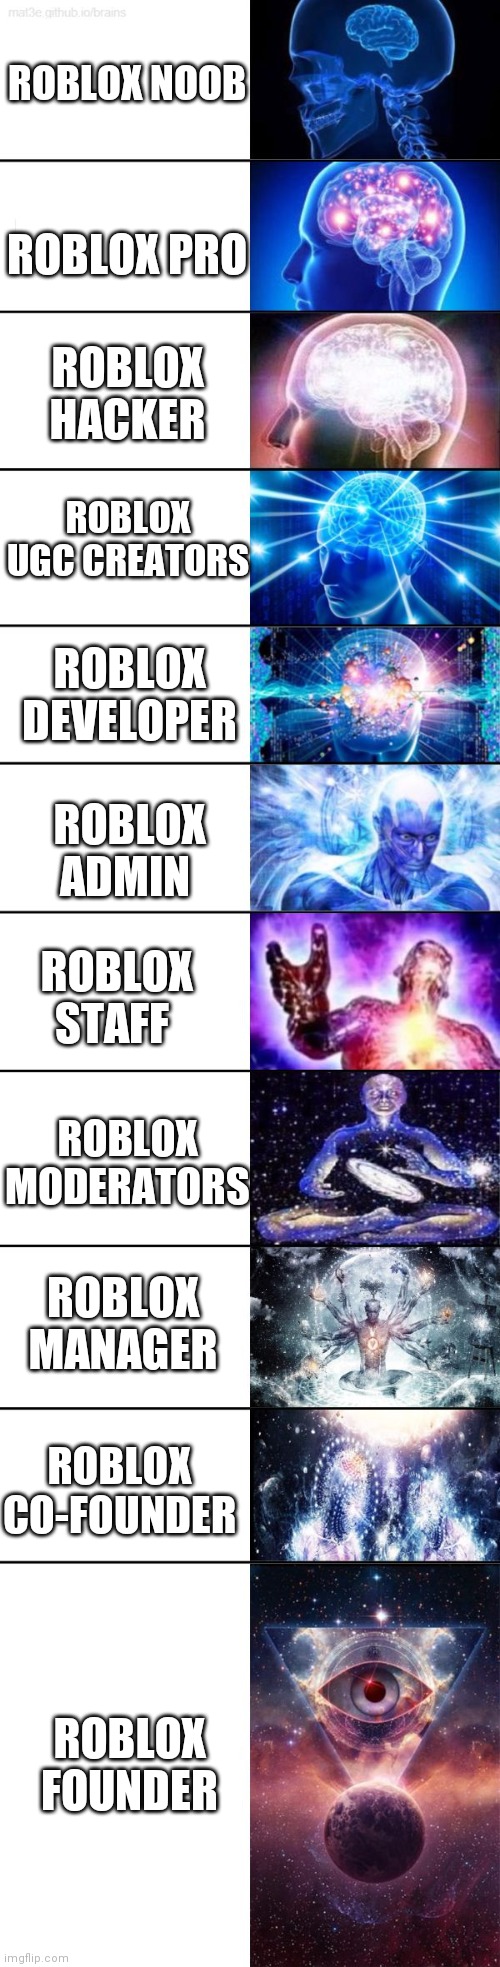 Roblox Imgflip - hacker vs admin roblox